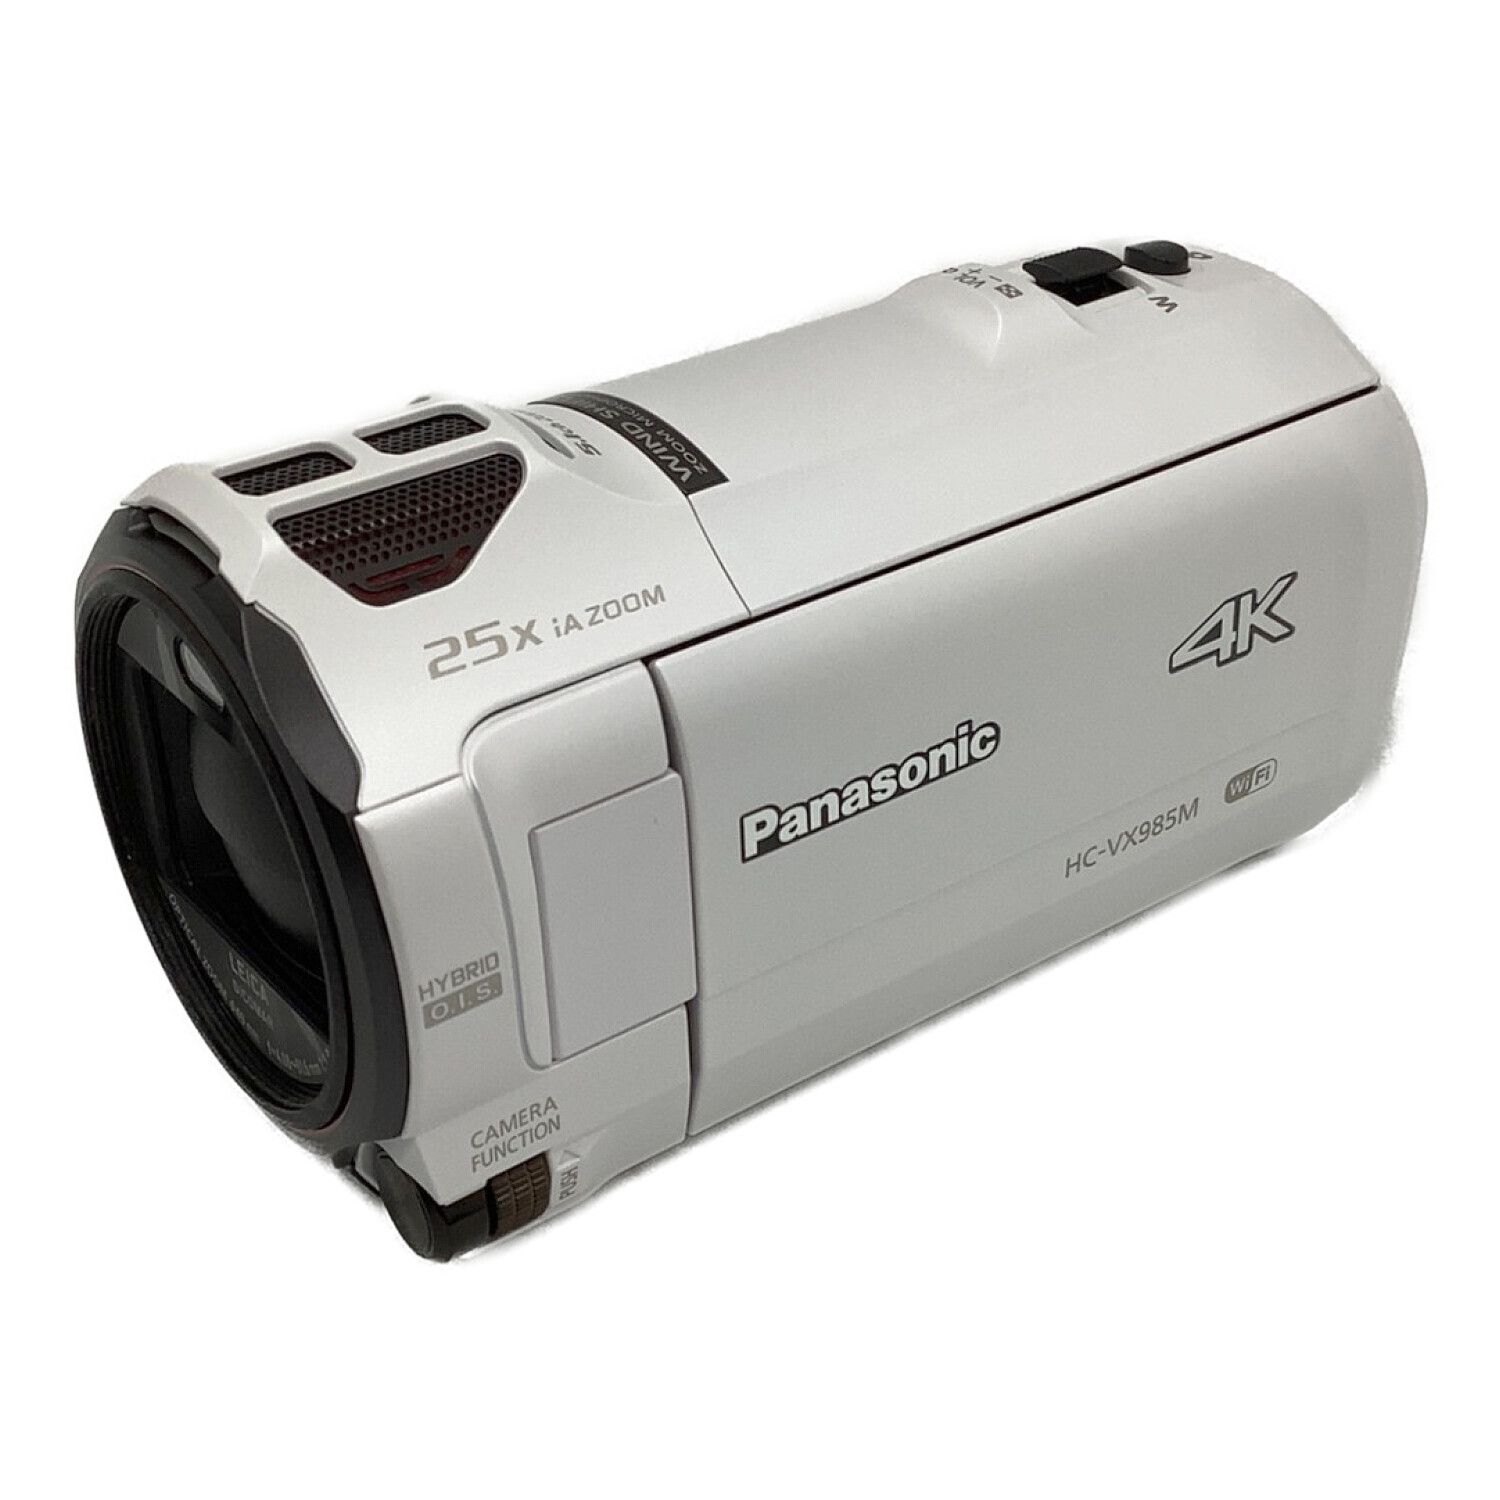 Panasonic (パナソニック) 4K対応デジタルビデオカメラ 1891万画素